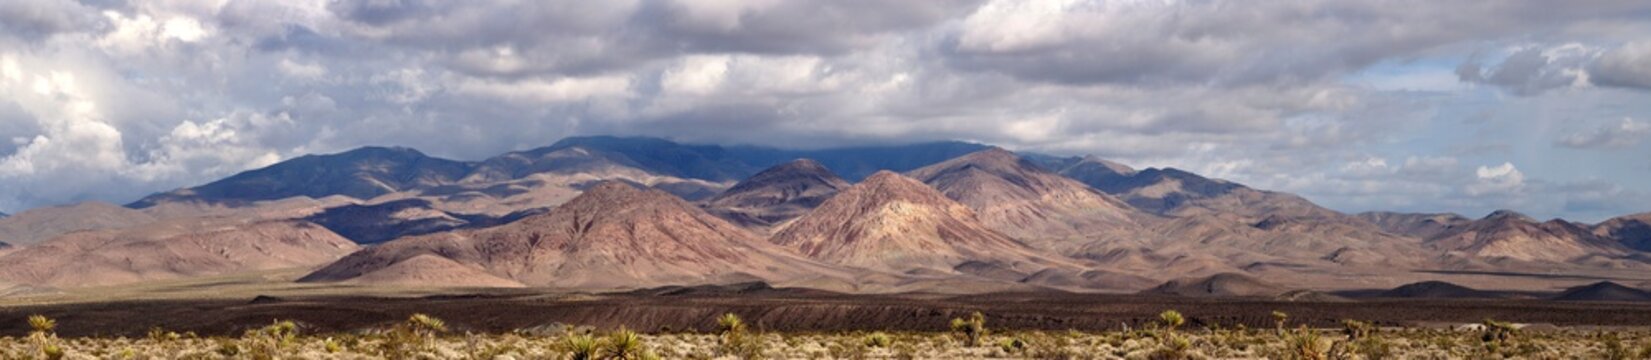 Sierra Nevada desert with mountains